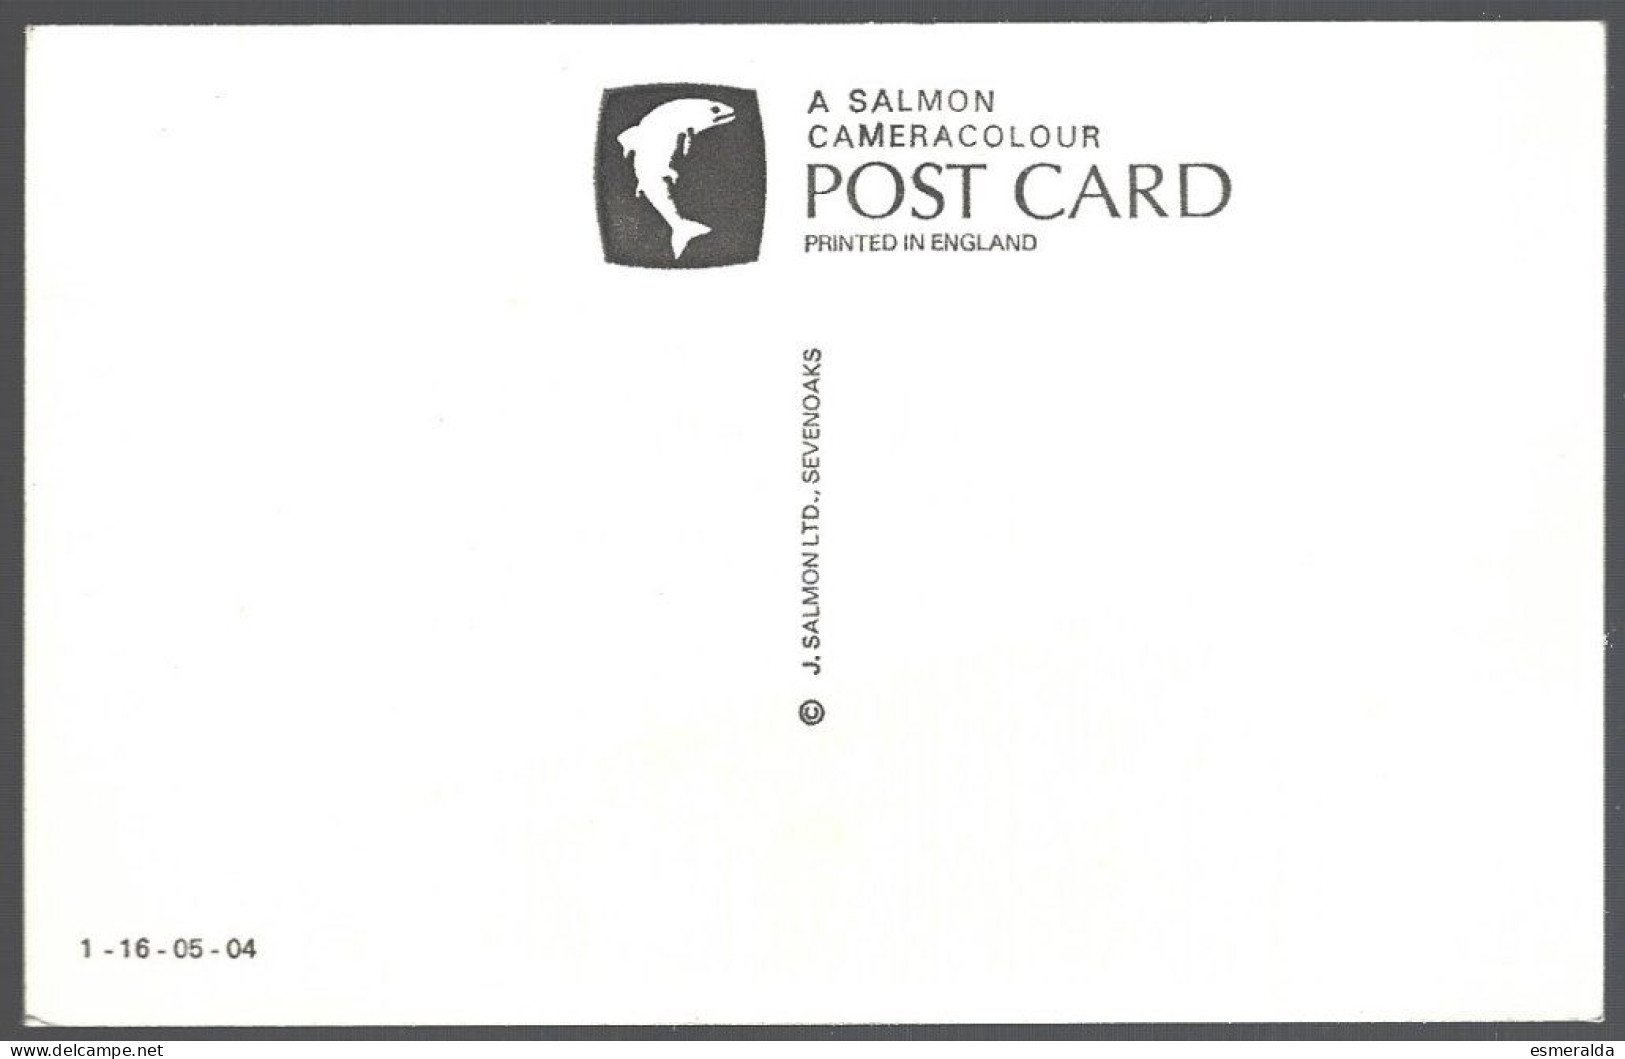 (EU)  PC Salmon 1-16-05-04- University College,Cardiff. Unused - Glamorgan